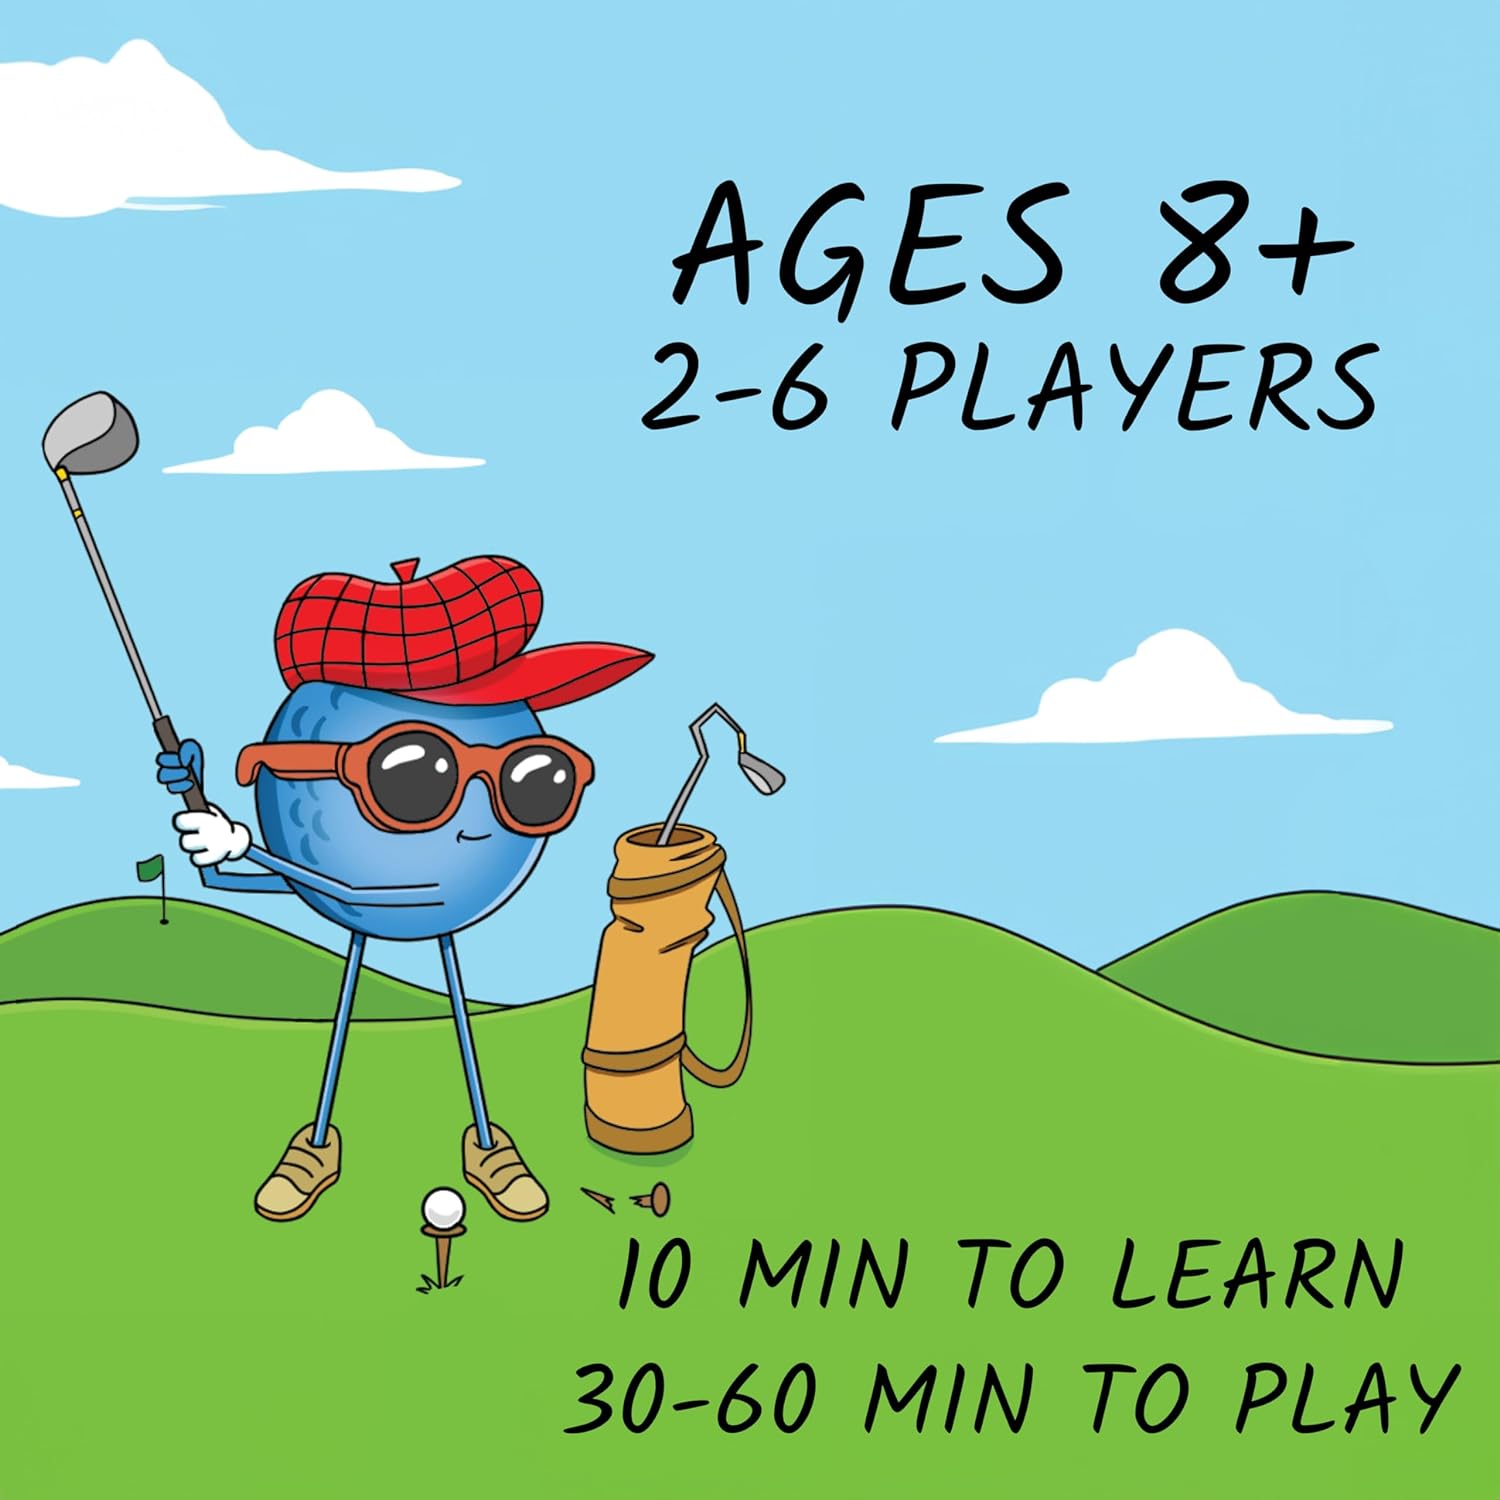 Bonfit Play Nine The Card Game of Golf Playibg Crads